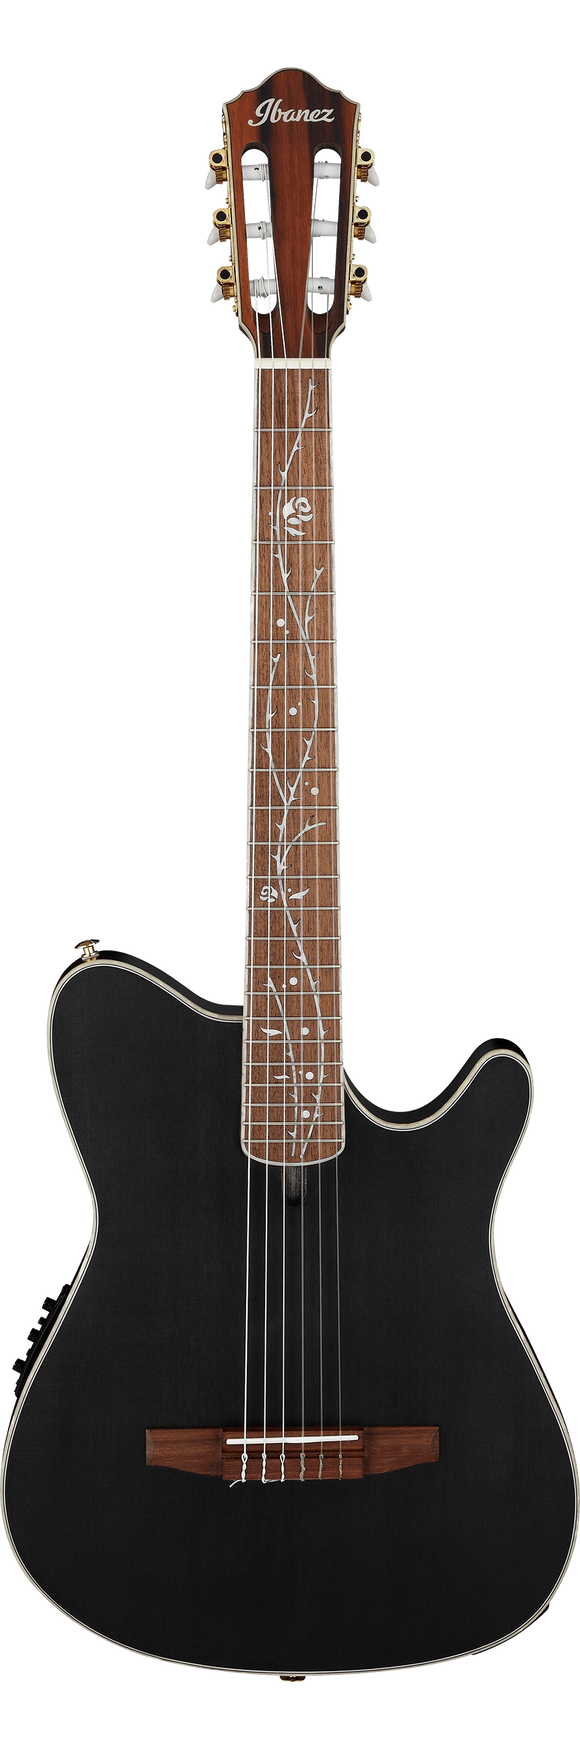 Ibanez Tim Henson Signature Nylon Guitar - Transparent Black Flat